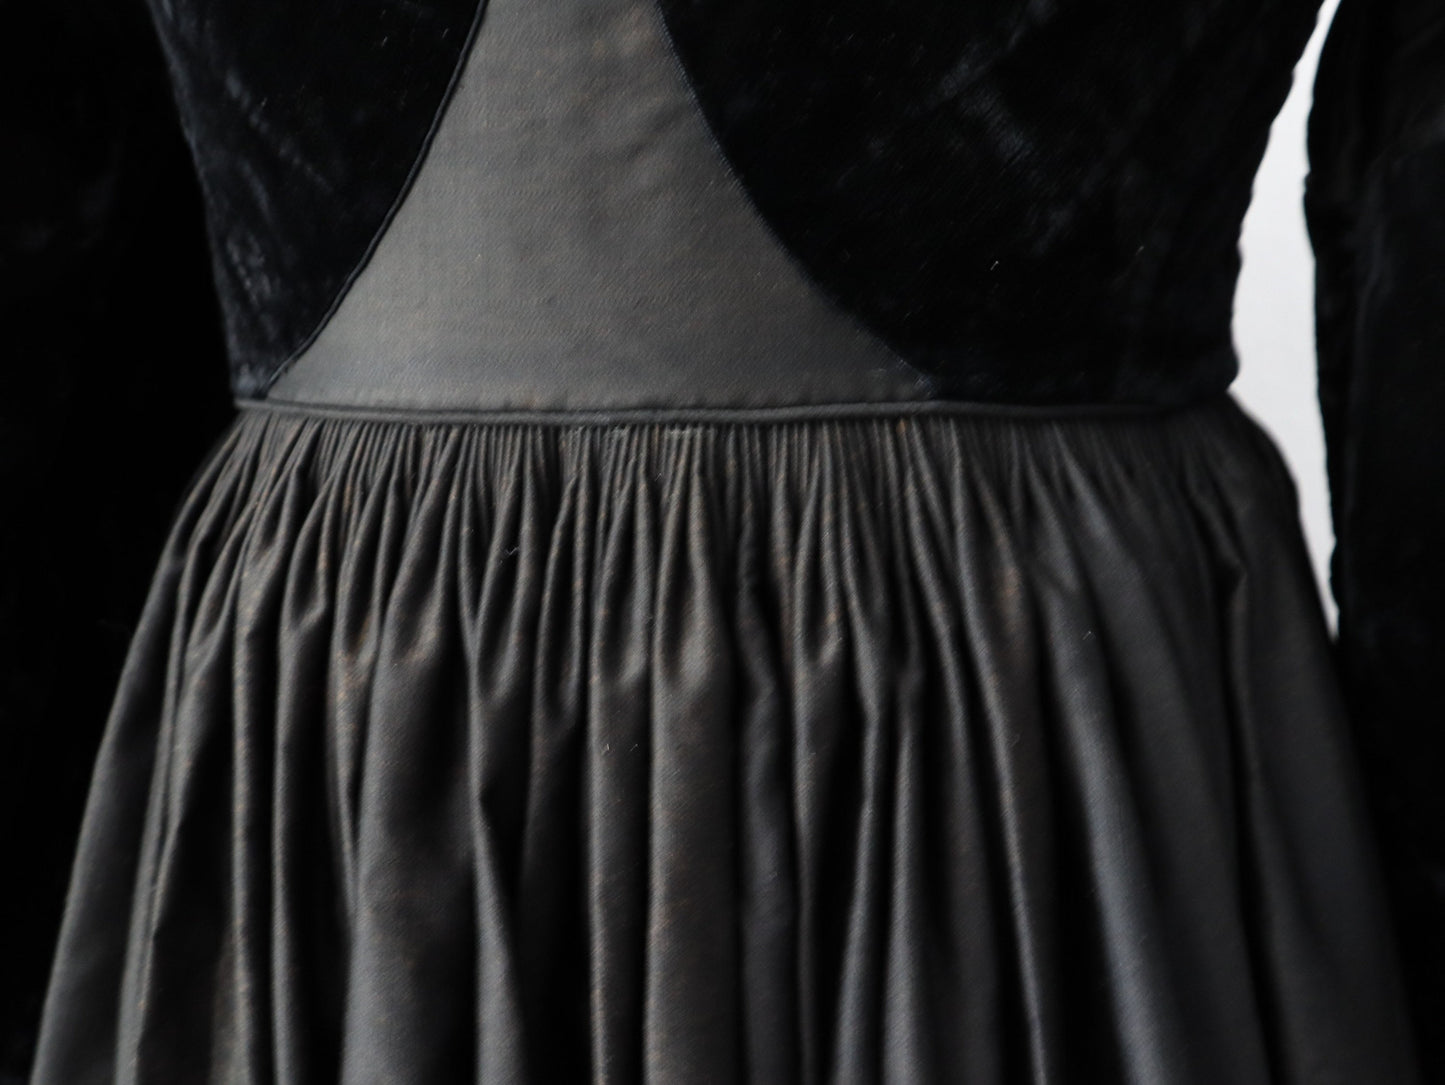 Antique French Breton Costume Dress Bodice Black Velvet Cotton Indigo late 19th century traditional clothing Britanny